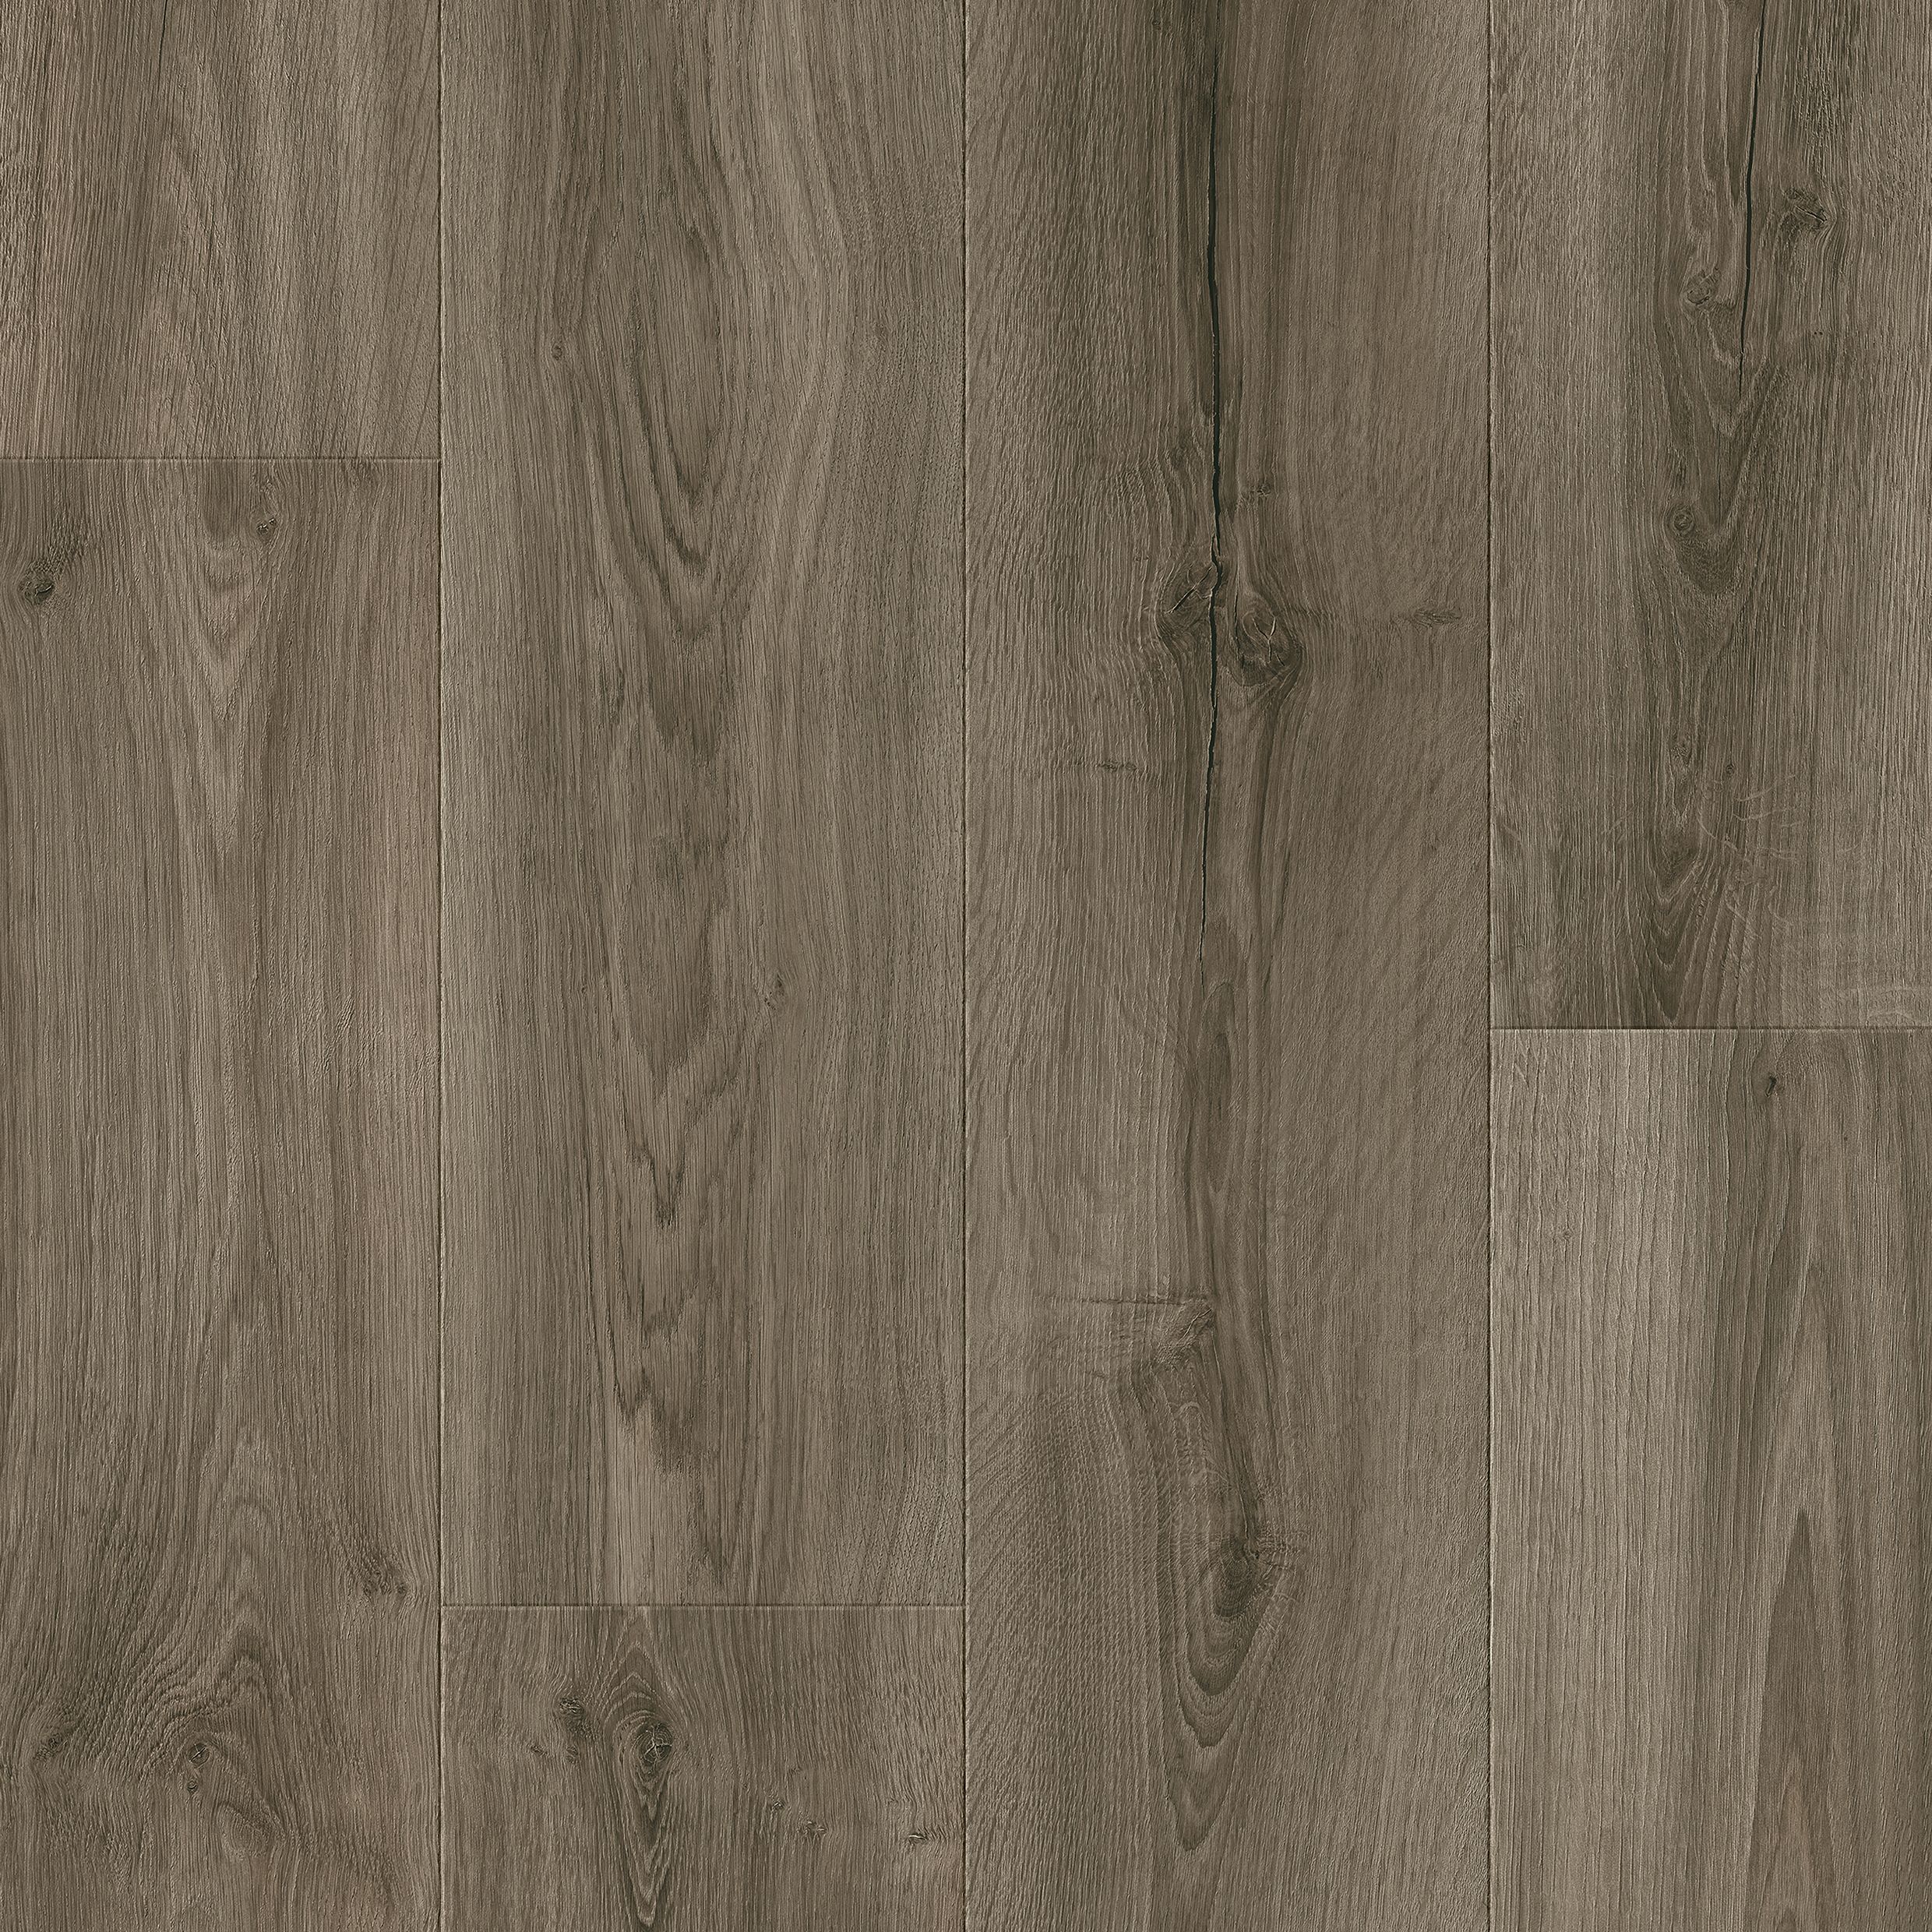 GoodHome Cleobury Brown Structured Oak effect Laminate flooring Sample